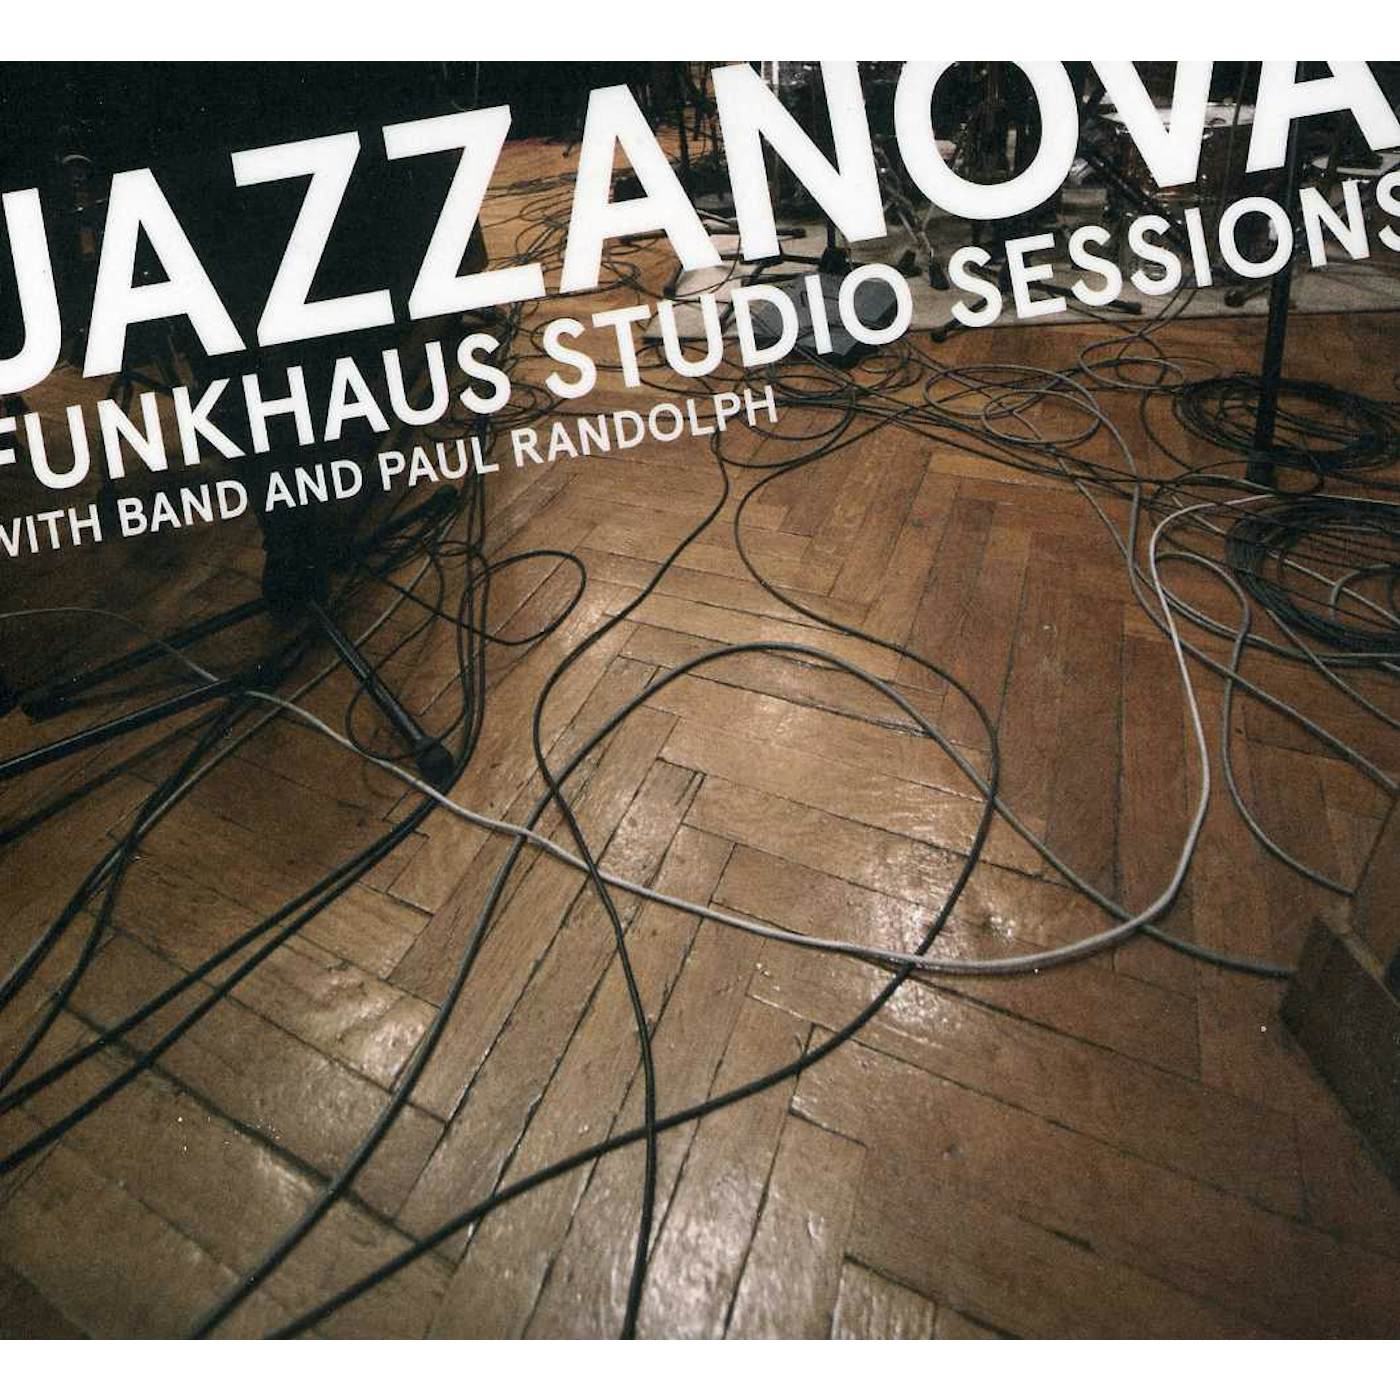 Jazzanova FUNKHAUS STUDIO SESSIONS CD